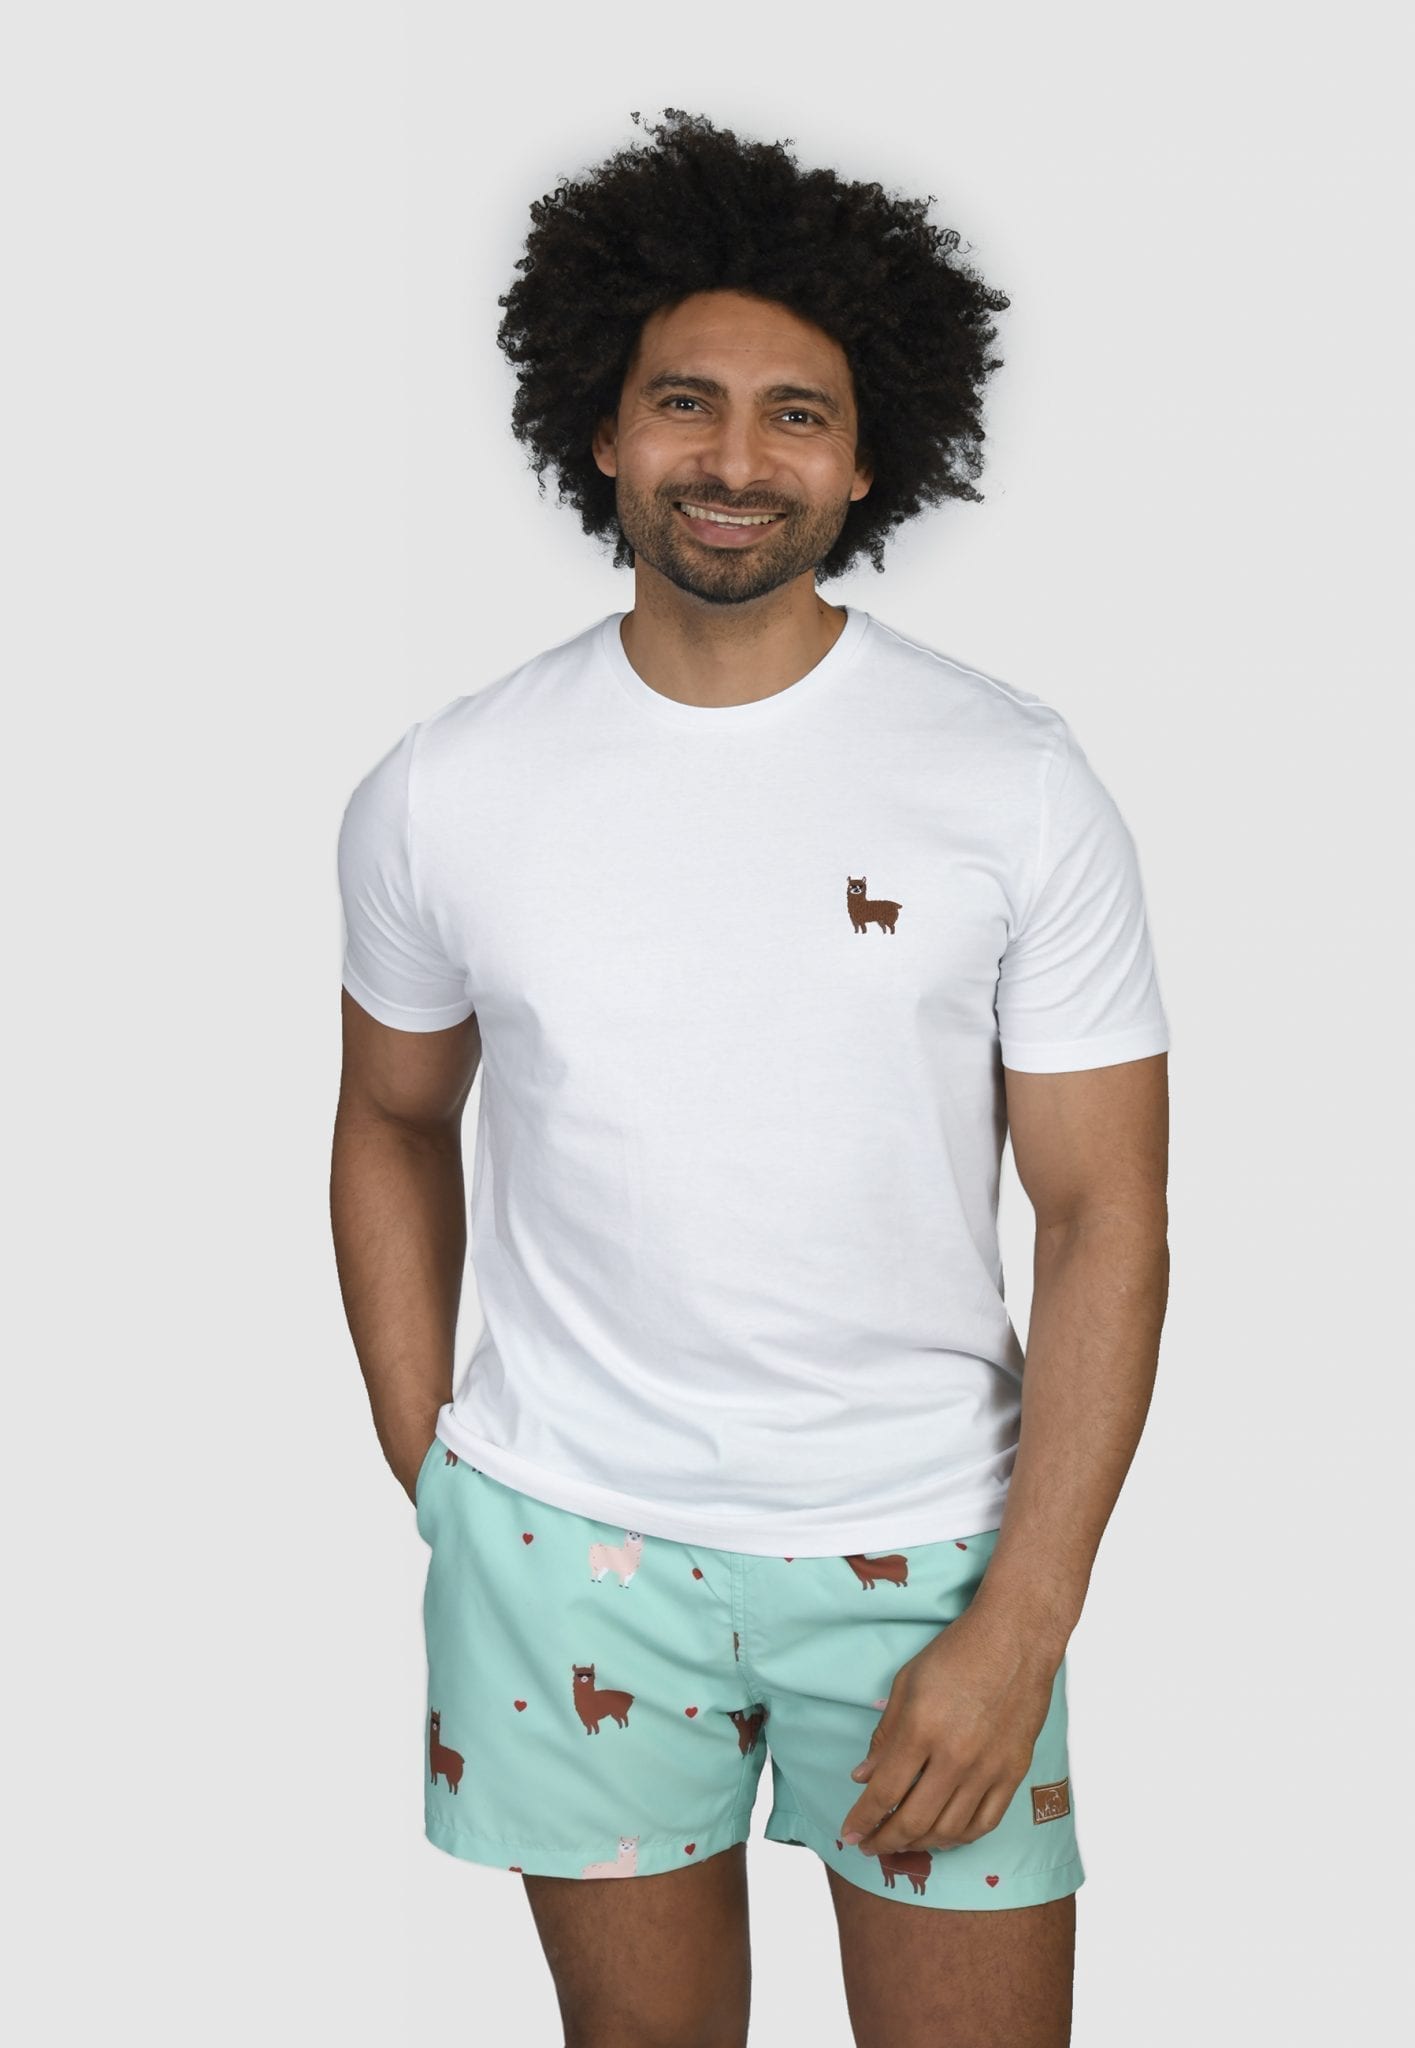 Alpaca Swim Trunks & T-shirt Bundle